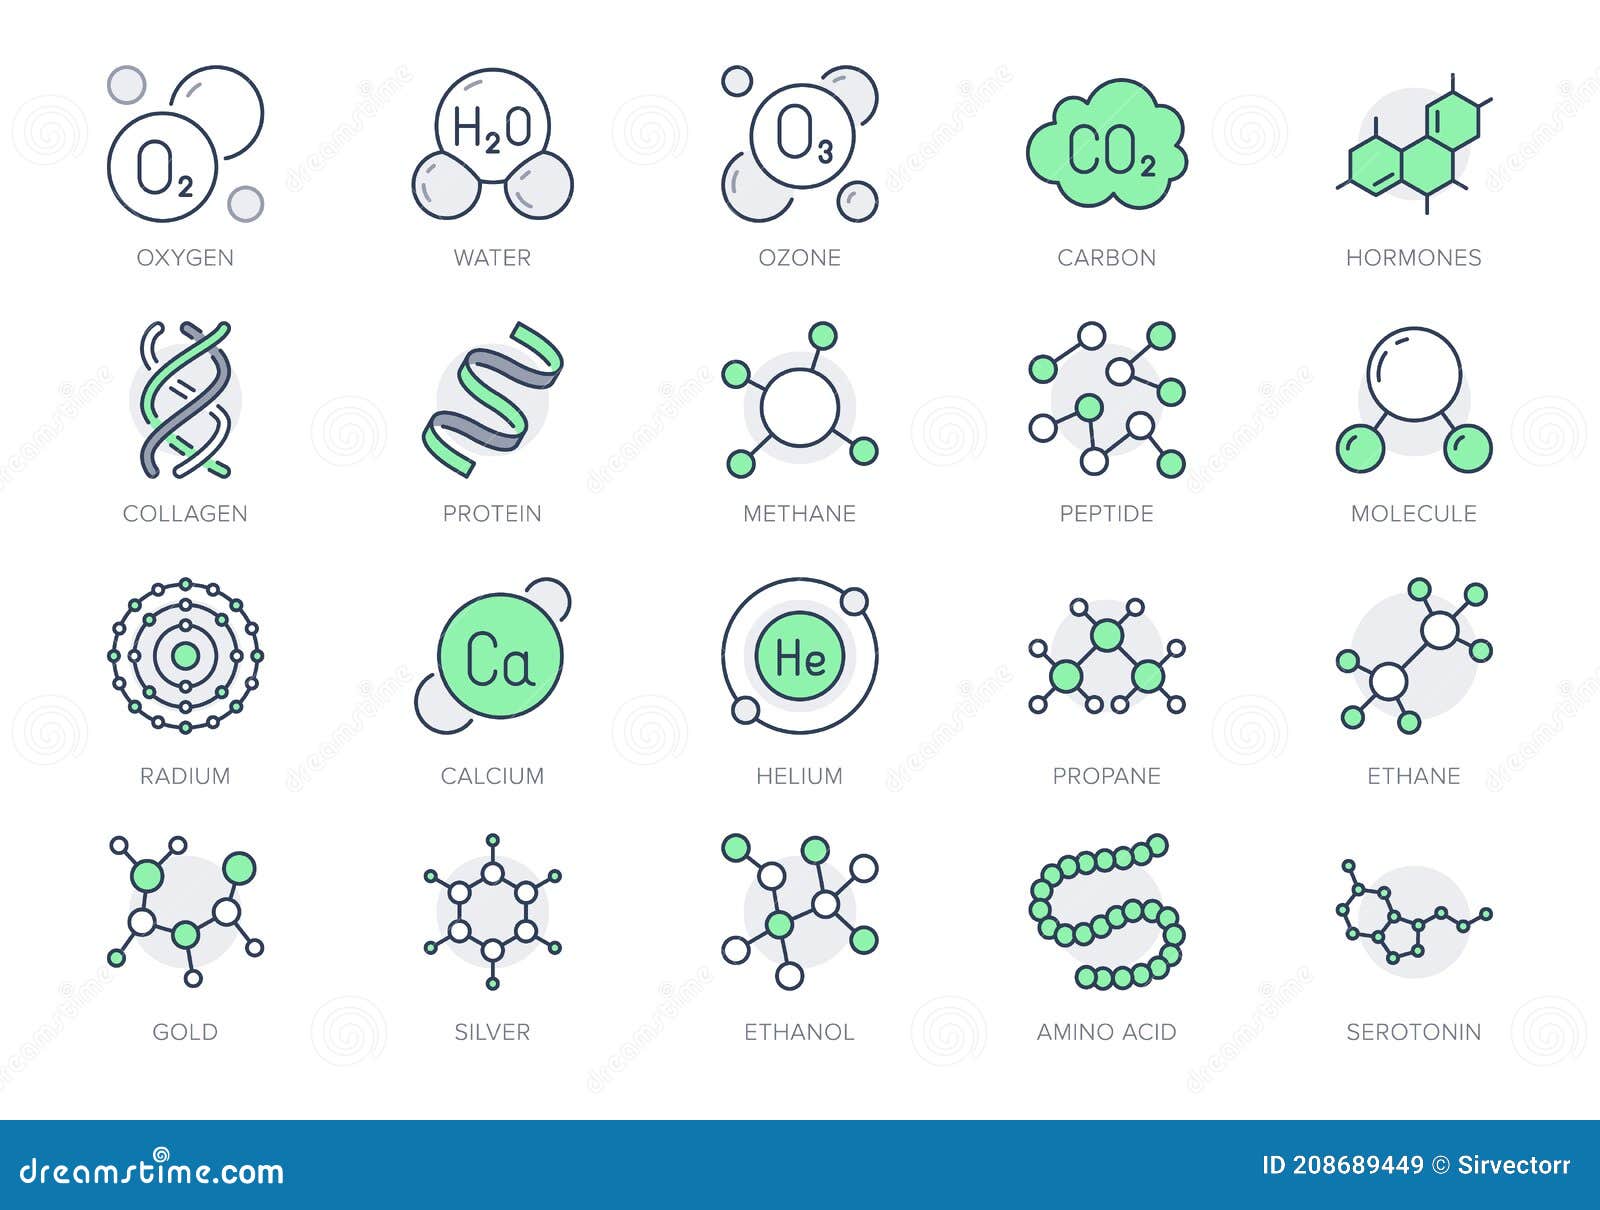 molecule line icons.   included icon amino acid, peptide, hormone, protein, collagen, ozone, o2